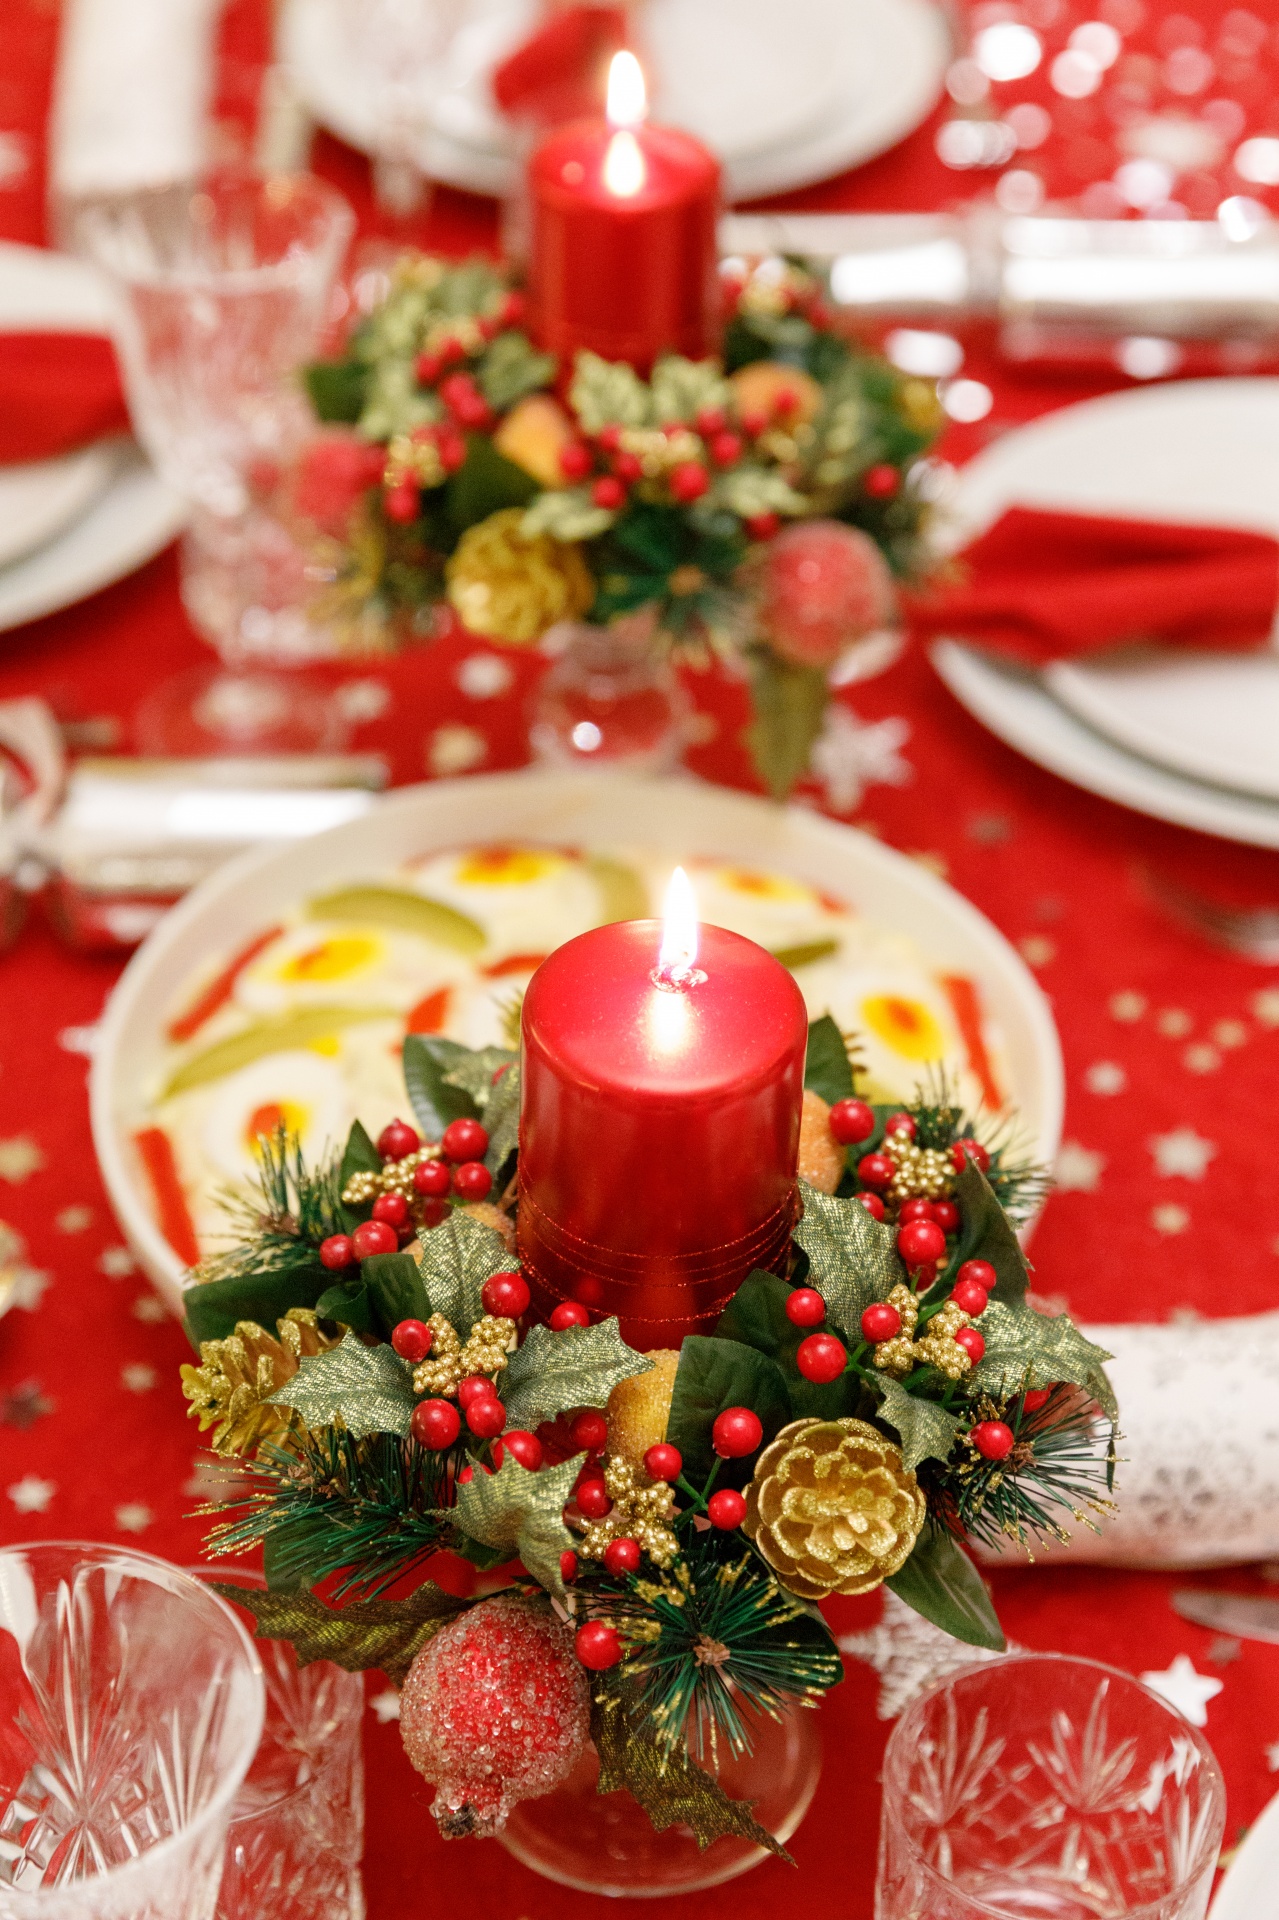 Candle On A Christmas Table